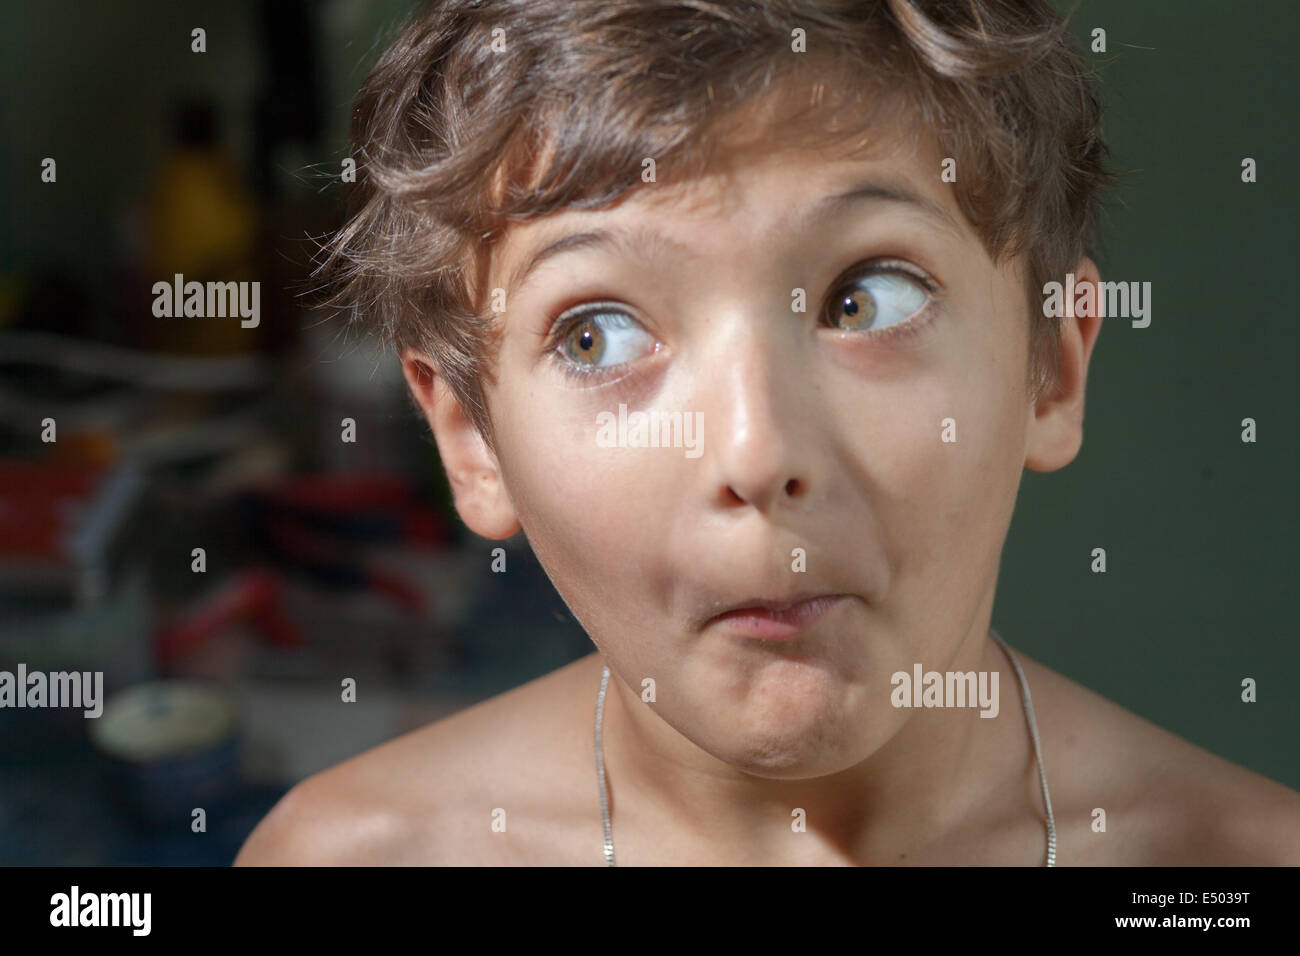 boy make faces, surprise Stock Photo